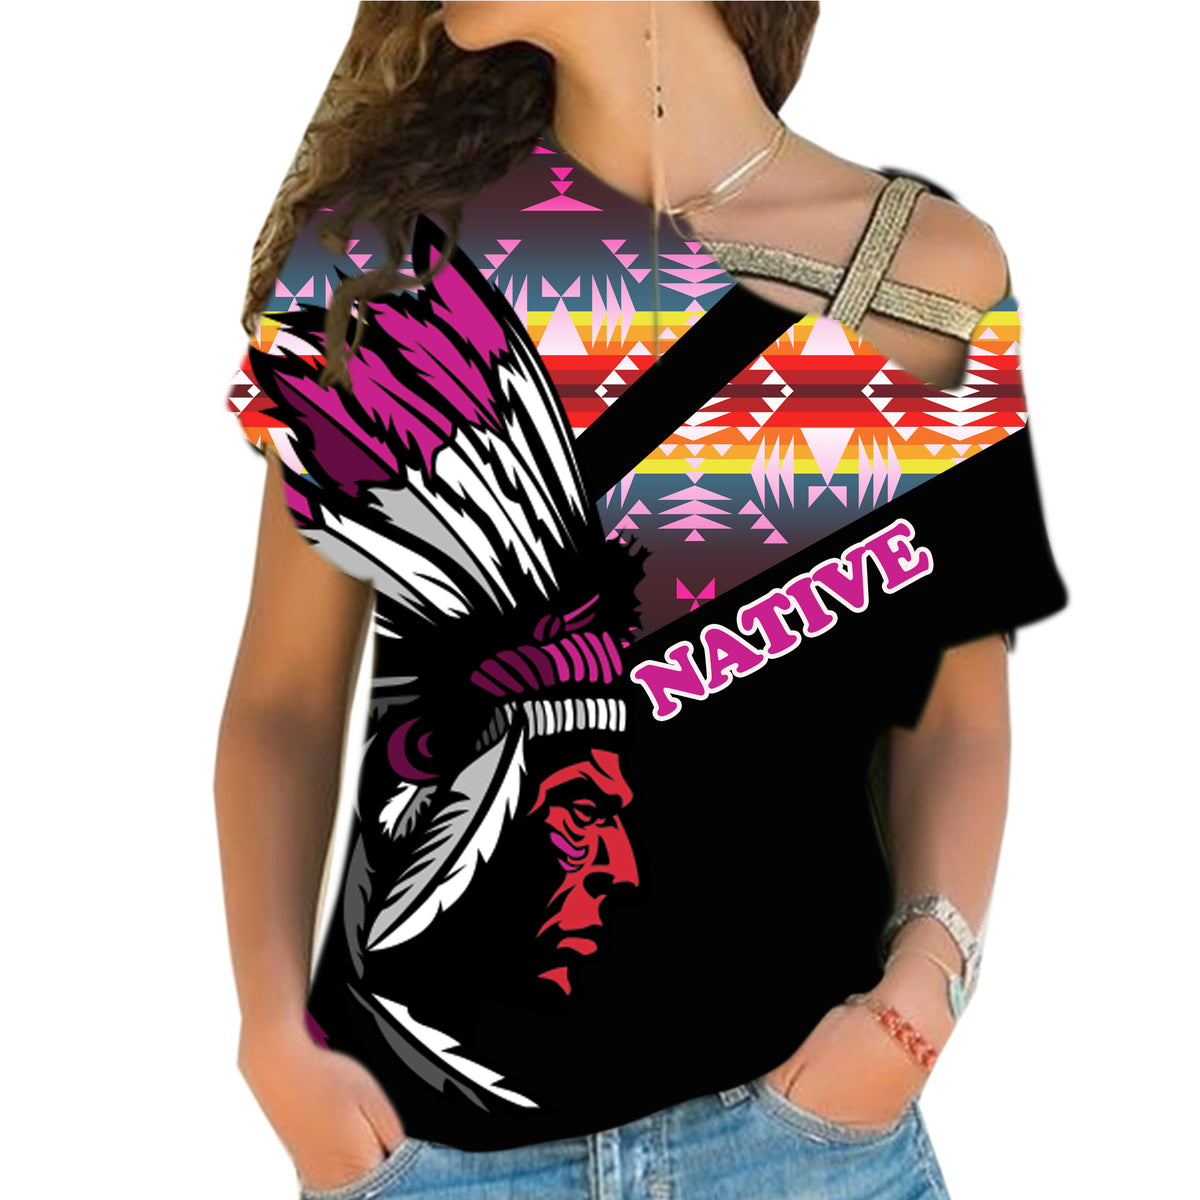 Powwow StoreCRS0001210 Native American Cross Shoulder Shirt